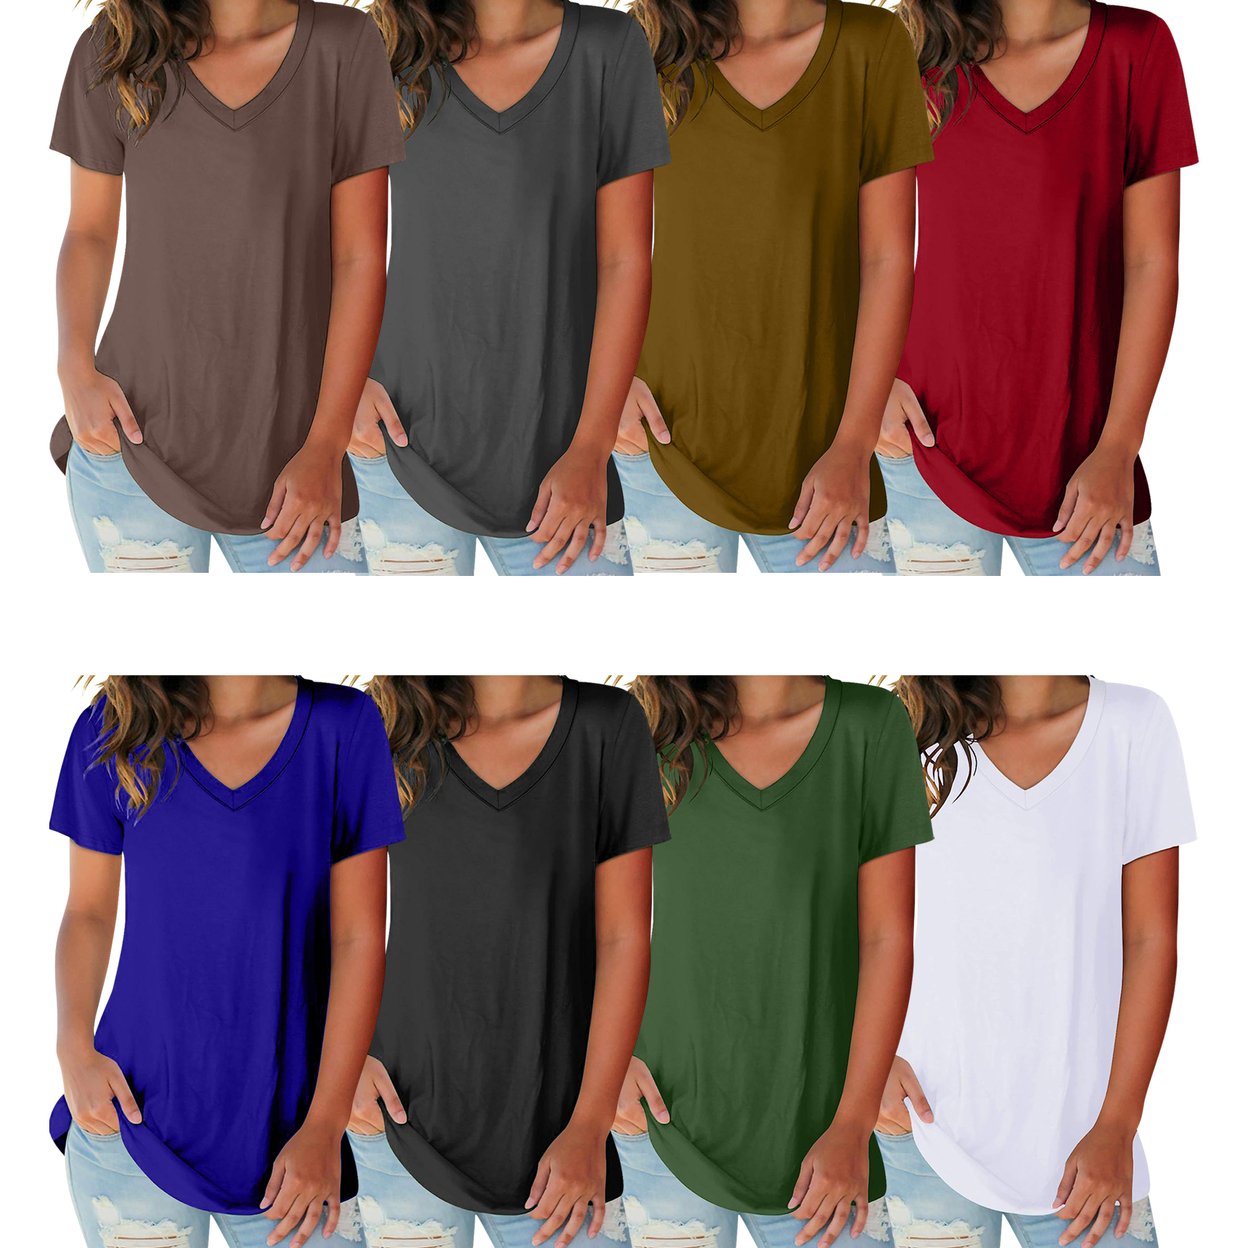 3-Pack: Women's Ultra Soft Smooth Cotton Blend Basic V-Neck Short Sleeve Shirts - Black, Navy, Brown, Small